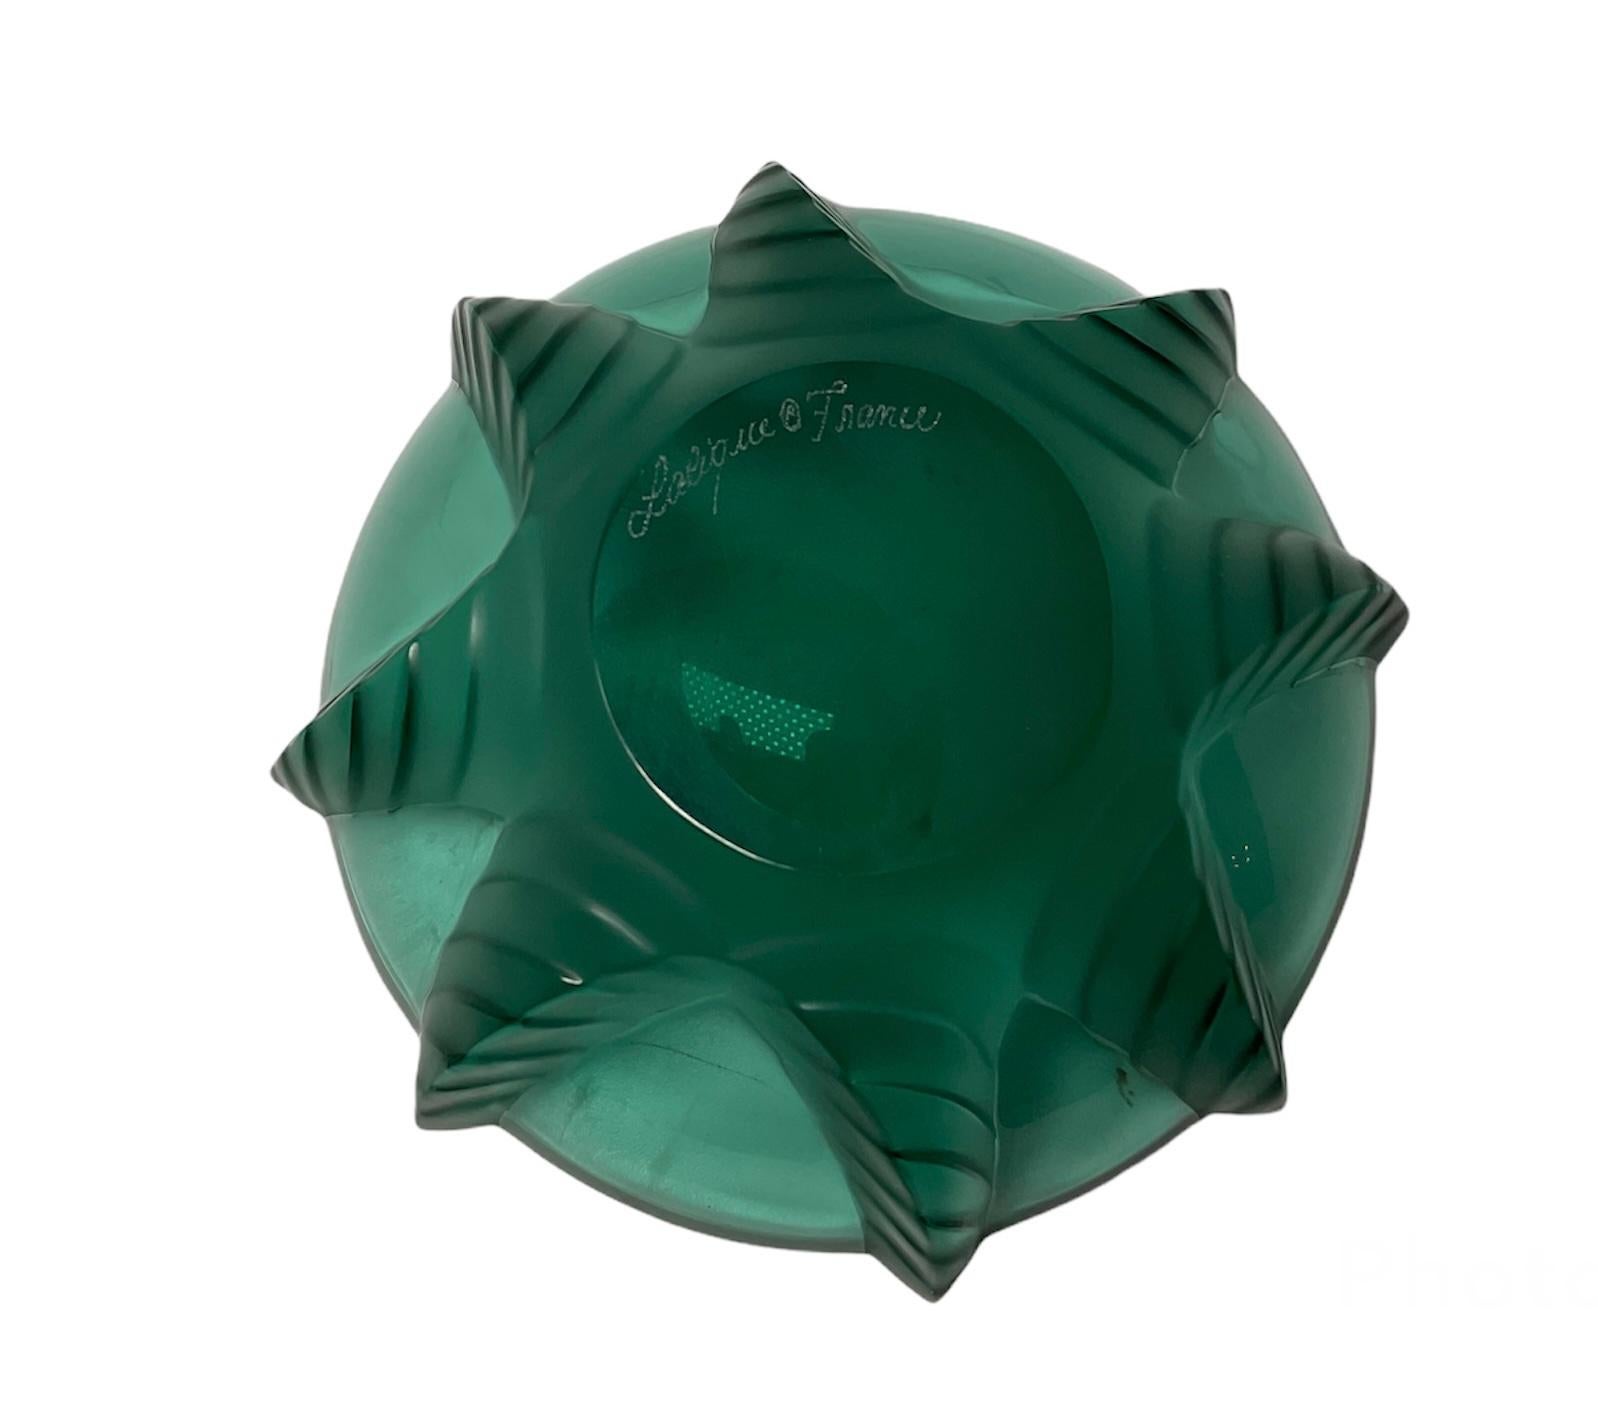 Lalique Crystal Green Teal Sea Star Small Bowl 2